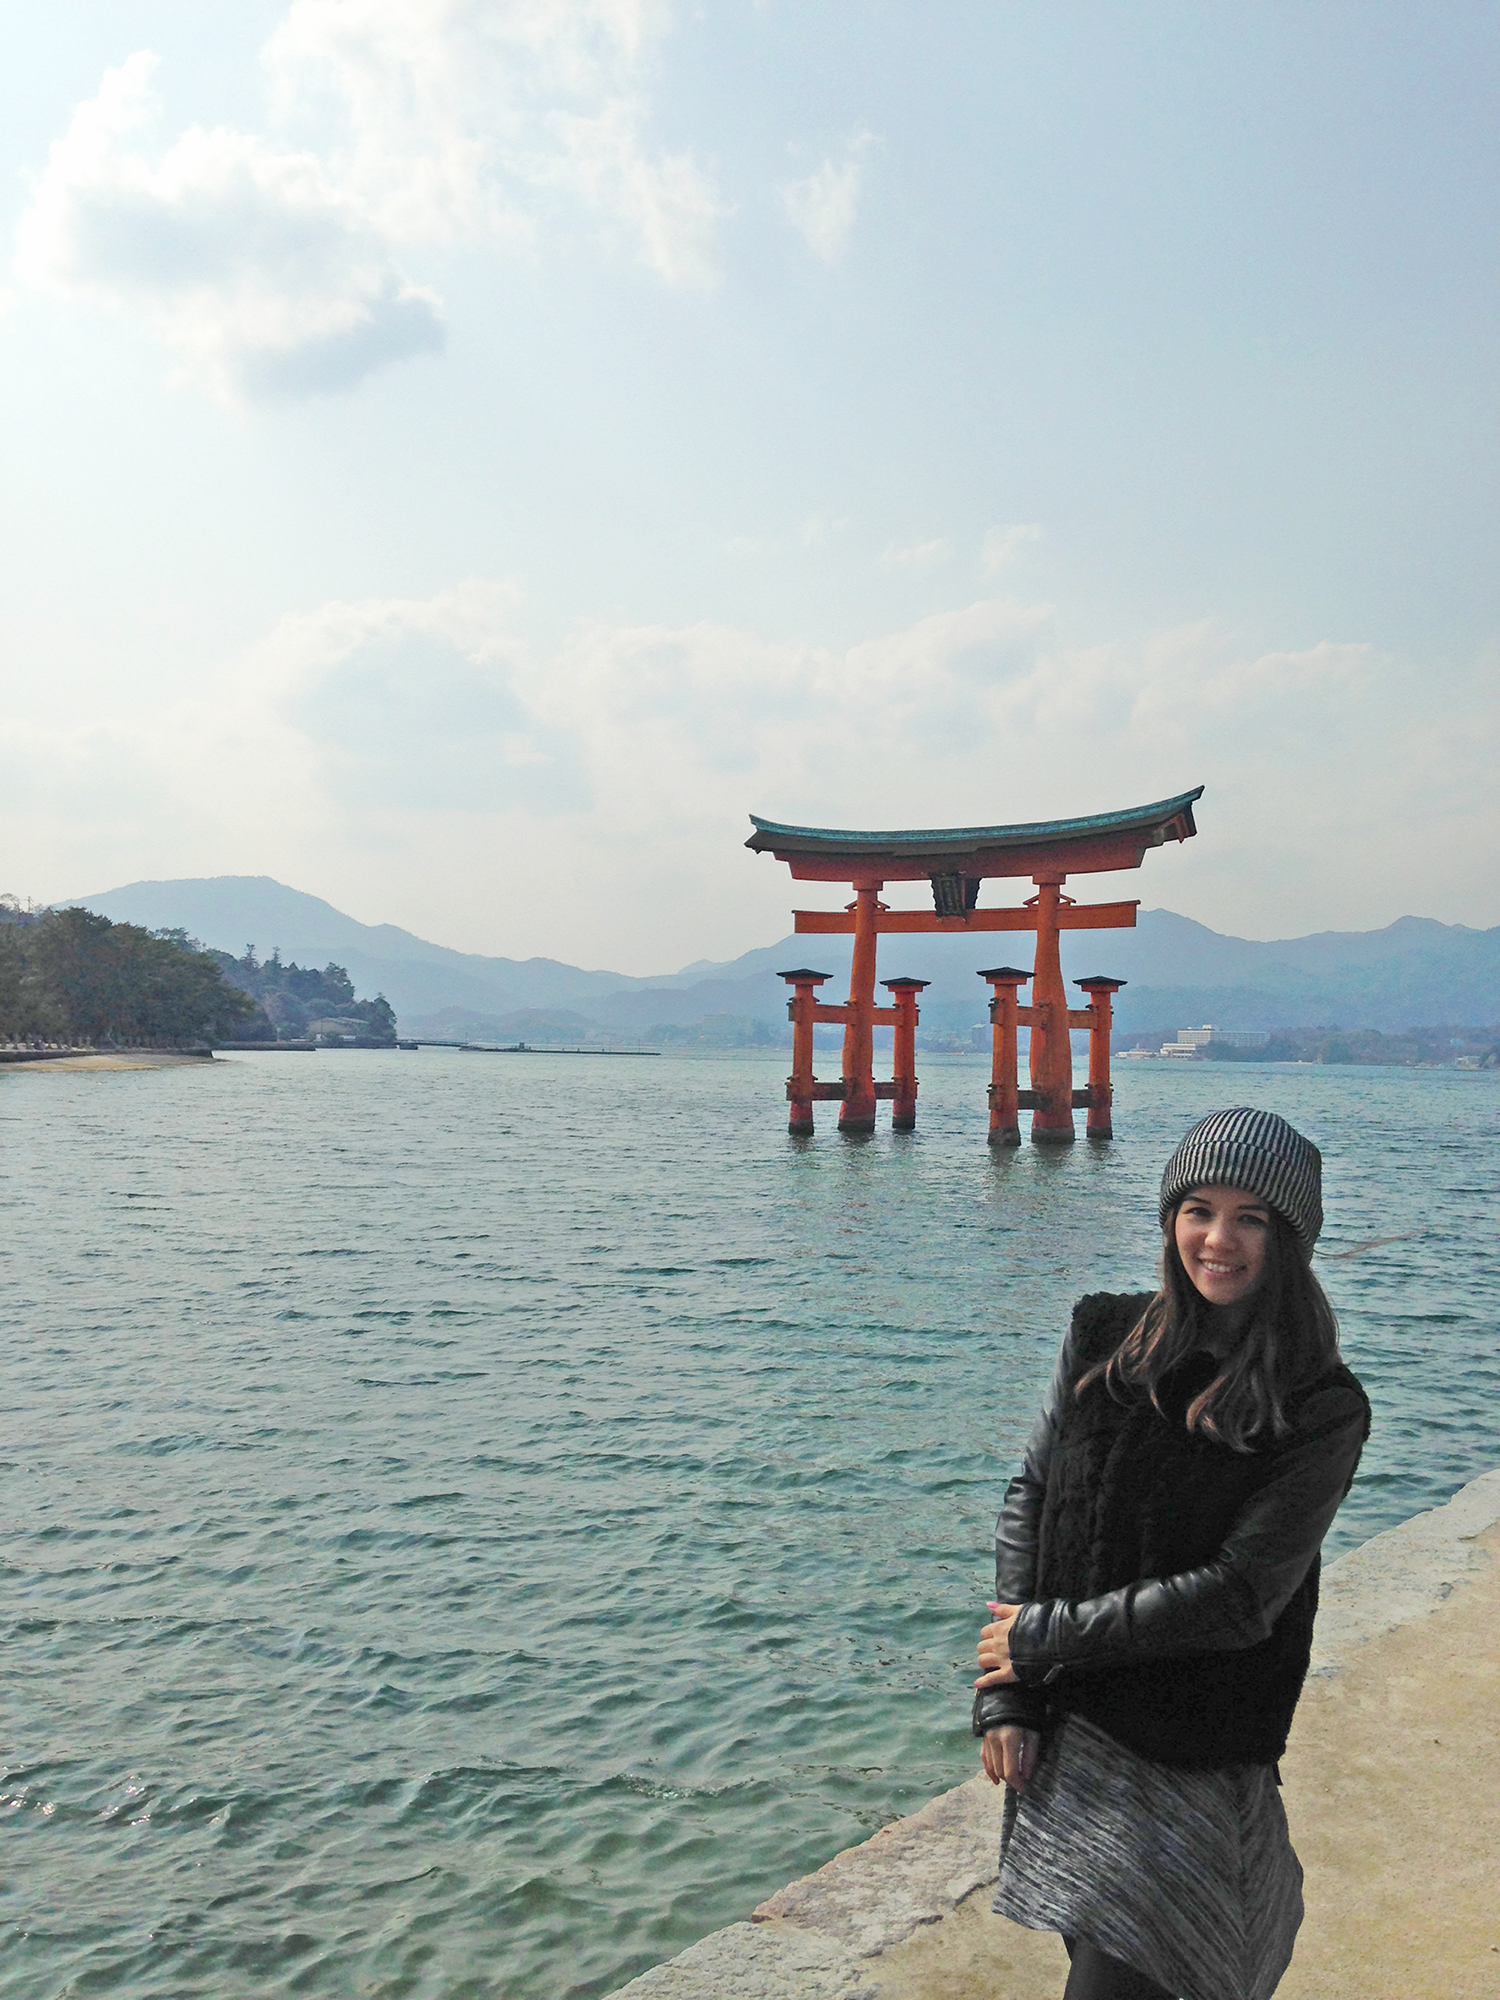 The famous torii gate of the Itsukushima on Miyajima Island